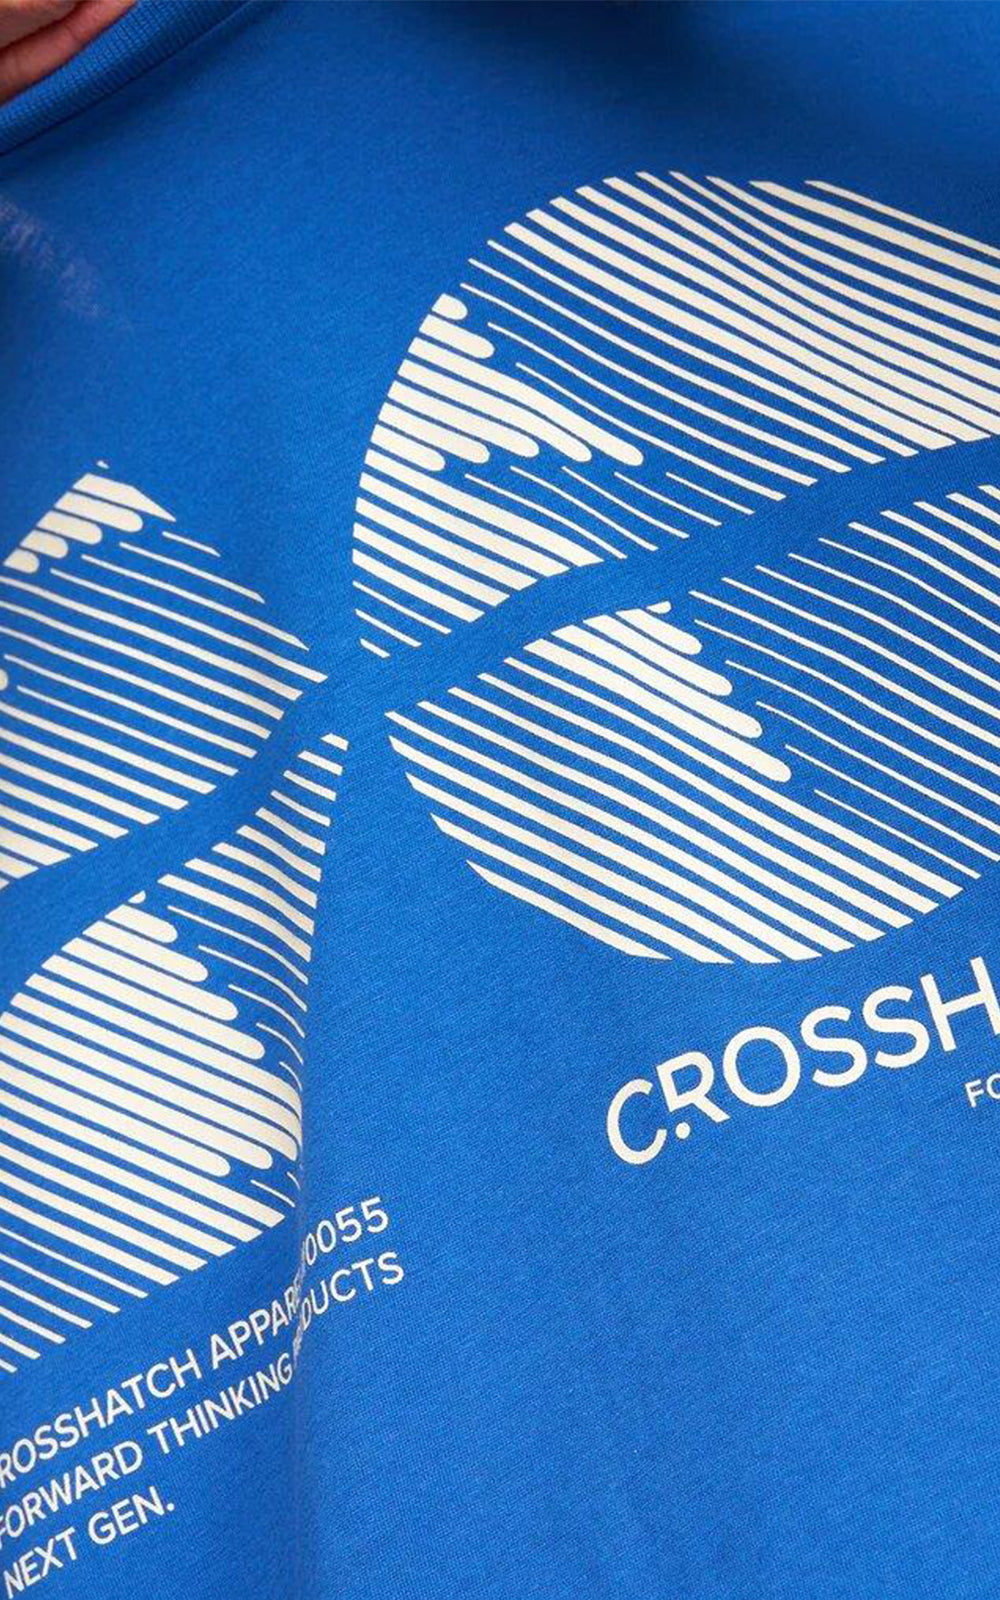 Crosshatch Men's Sneepy T-Shirt - Pack of 5